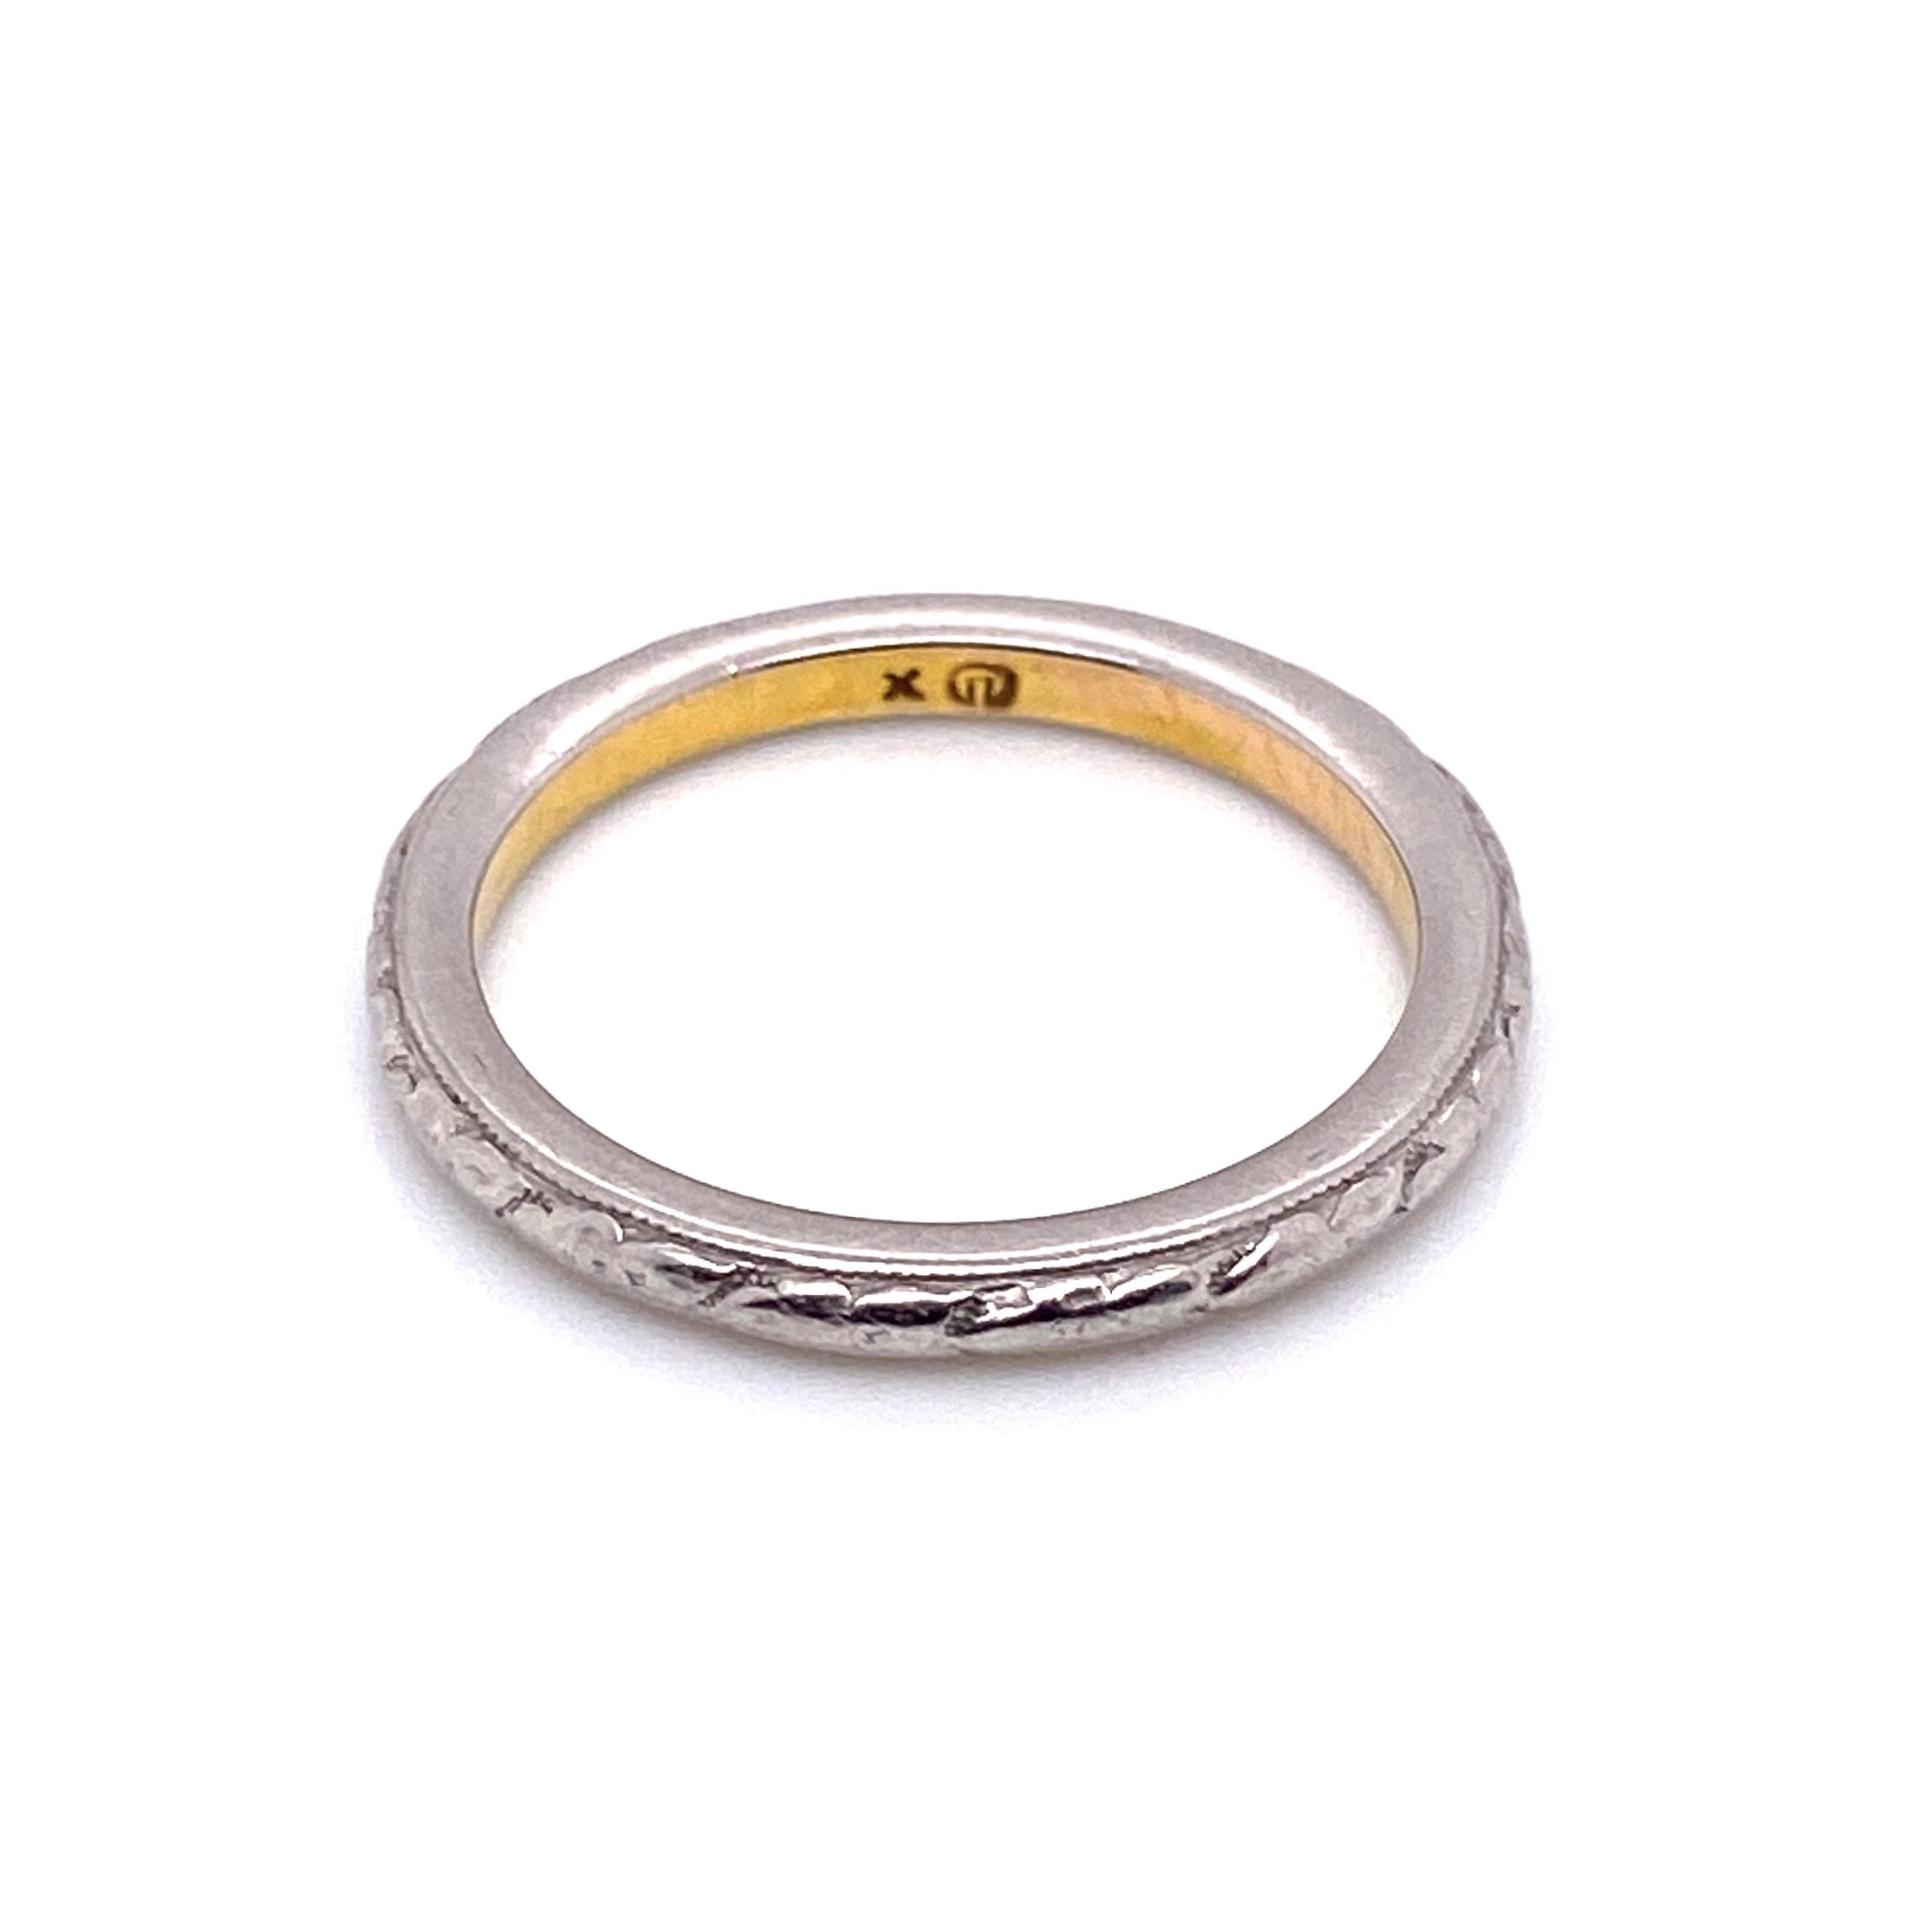 Platinum on 20K Gold Art Deco Engraved Band Ring 3.1g, s4.75